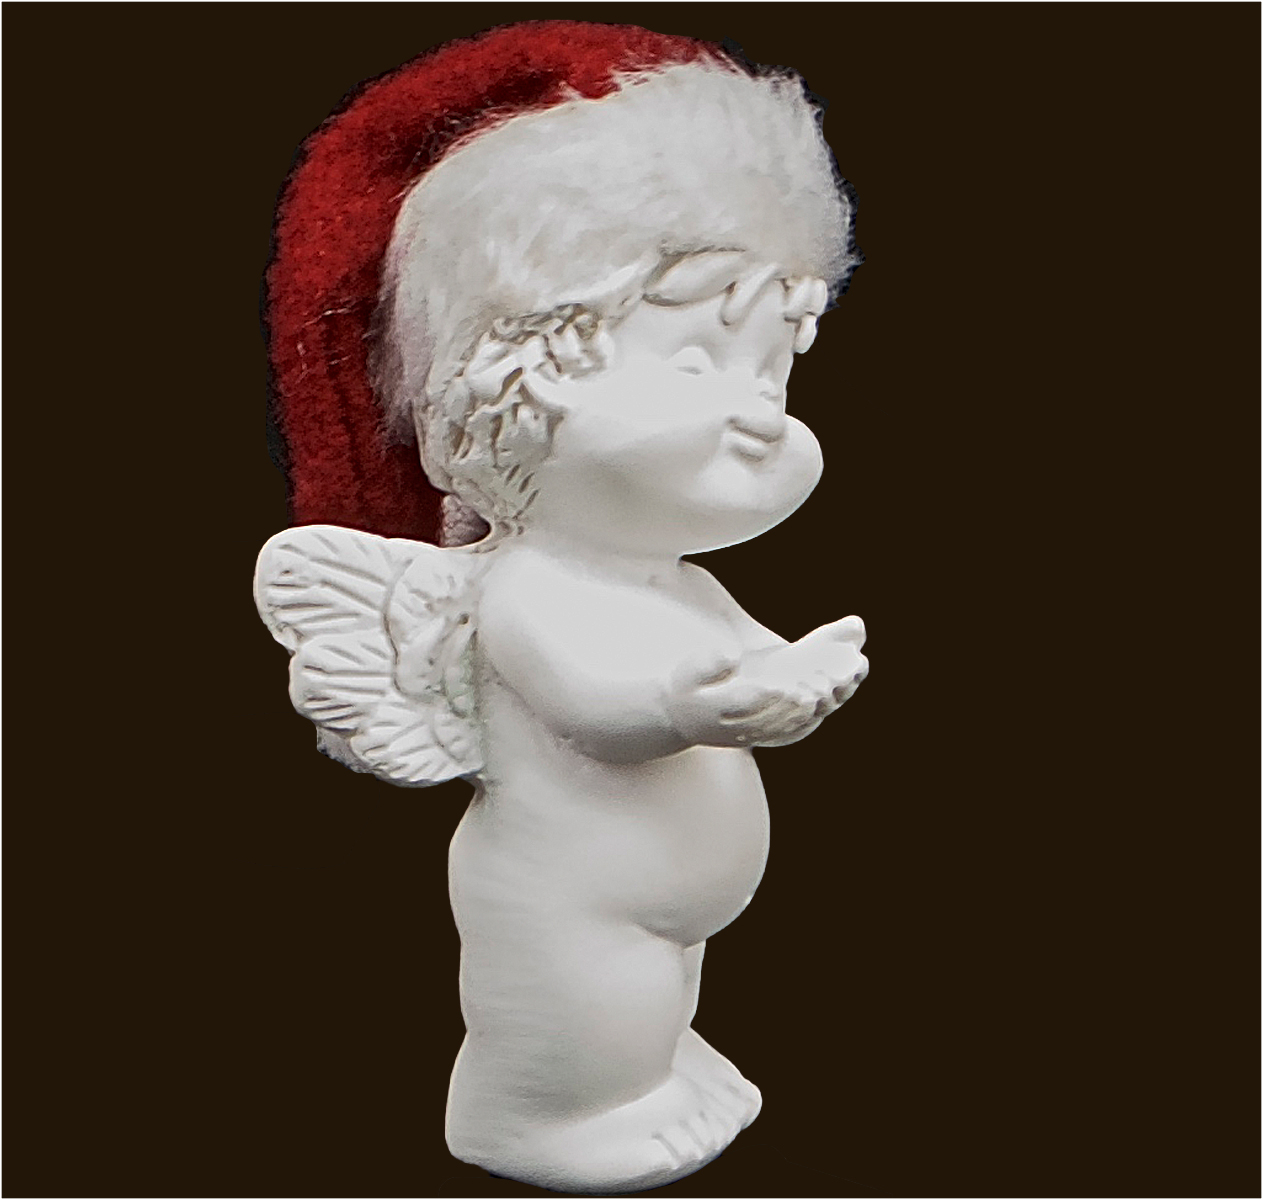 IGOR mit Santa-Mütze (Figur 2) Höhe: 11 cm